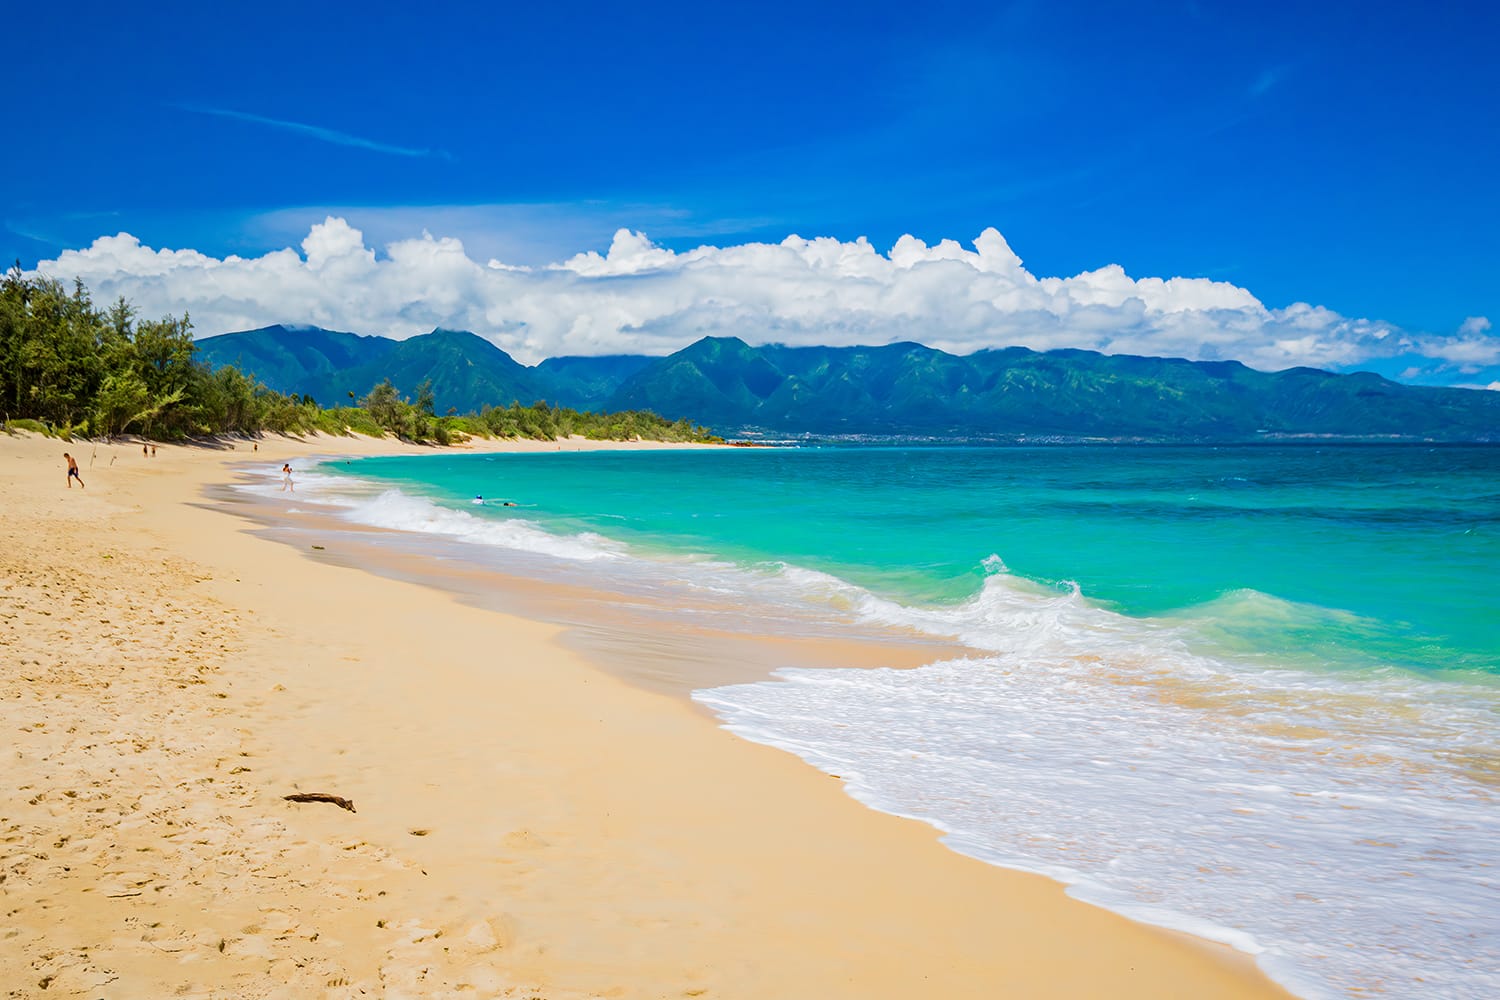 Baldwin Beach Park is a beautiful, long white-sand beach on Maui's North Shore.